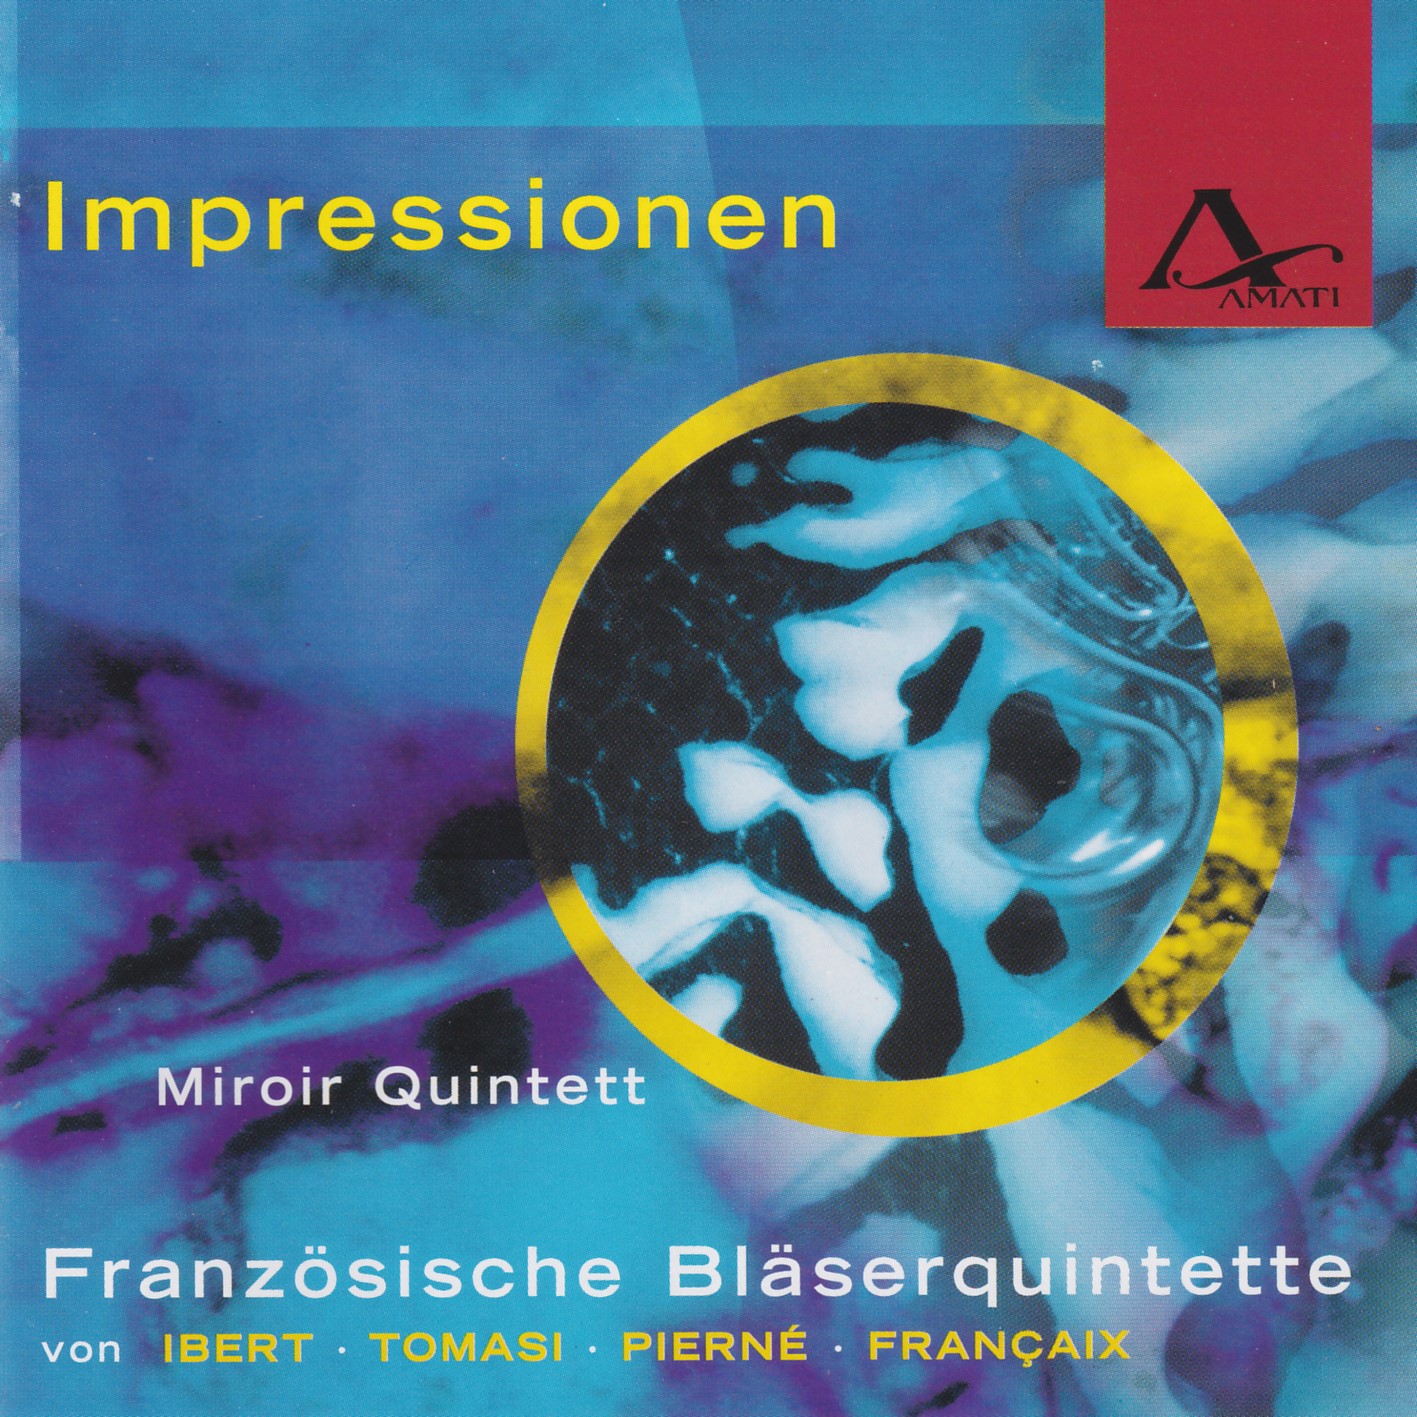 Miroir-Quintett - Impressionen